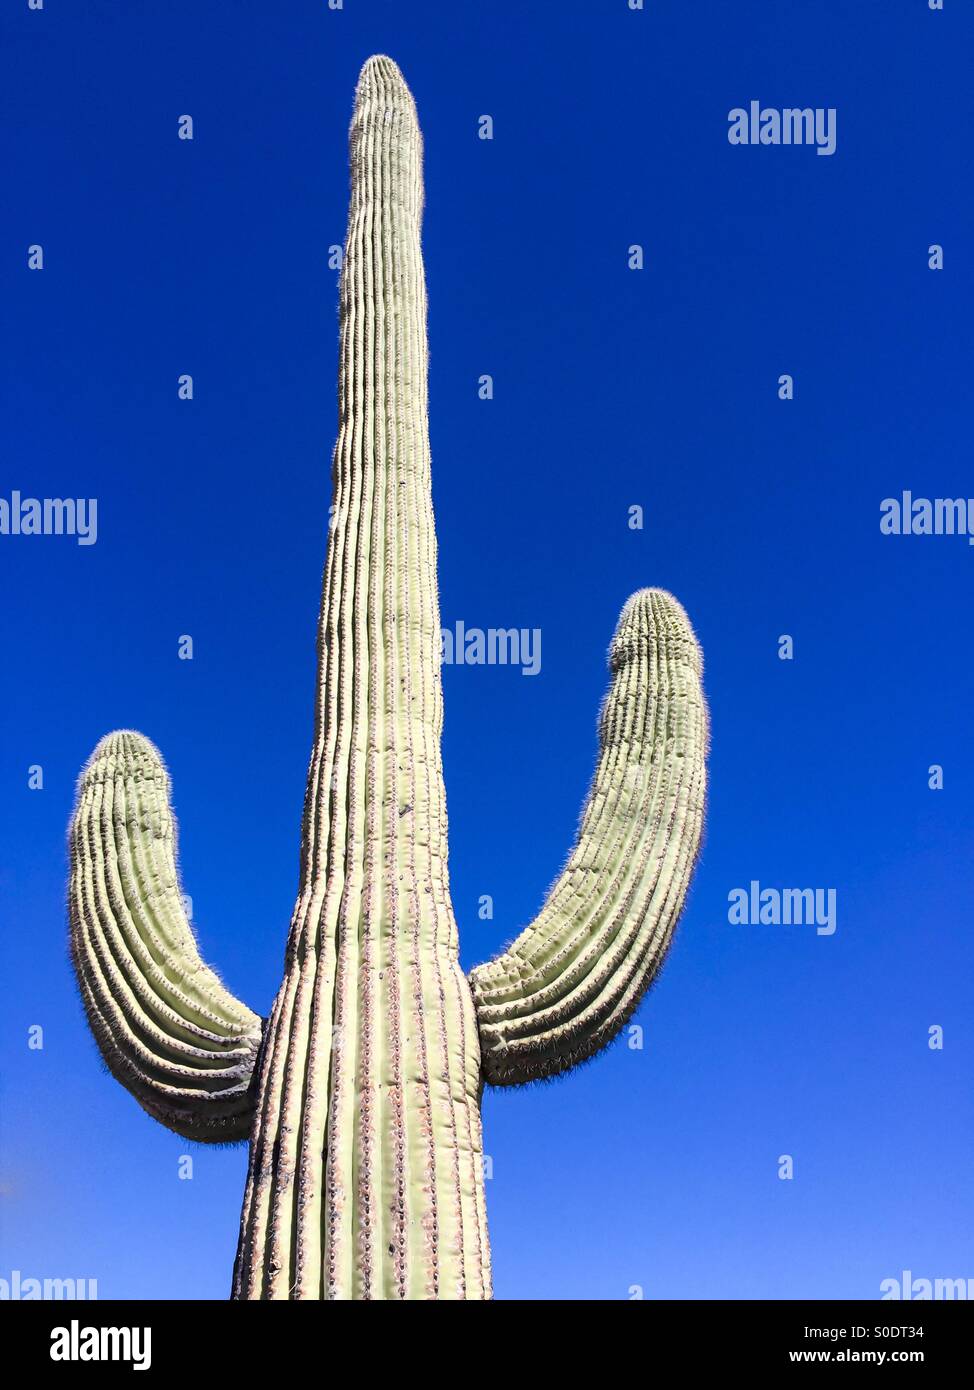 Tall saguaro cactus (binomial name: Caregiea gigantea) with two arms in Saguaro National Park West, Tucson, Arizona, USA Stock Photo